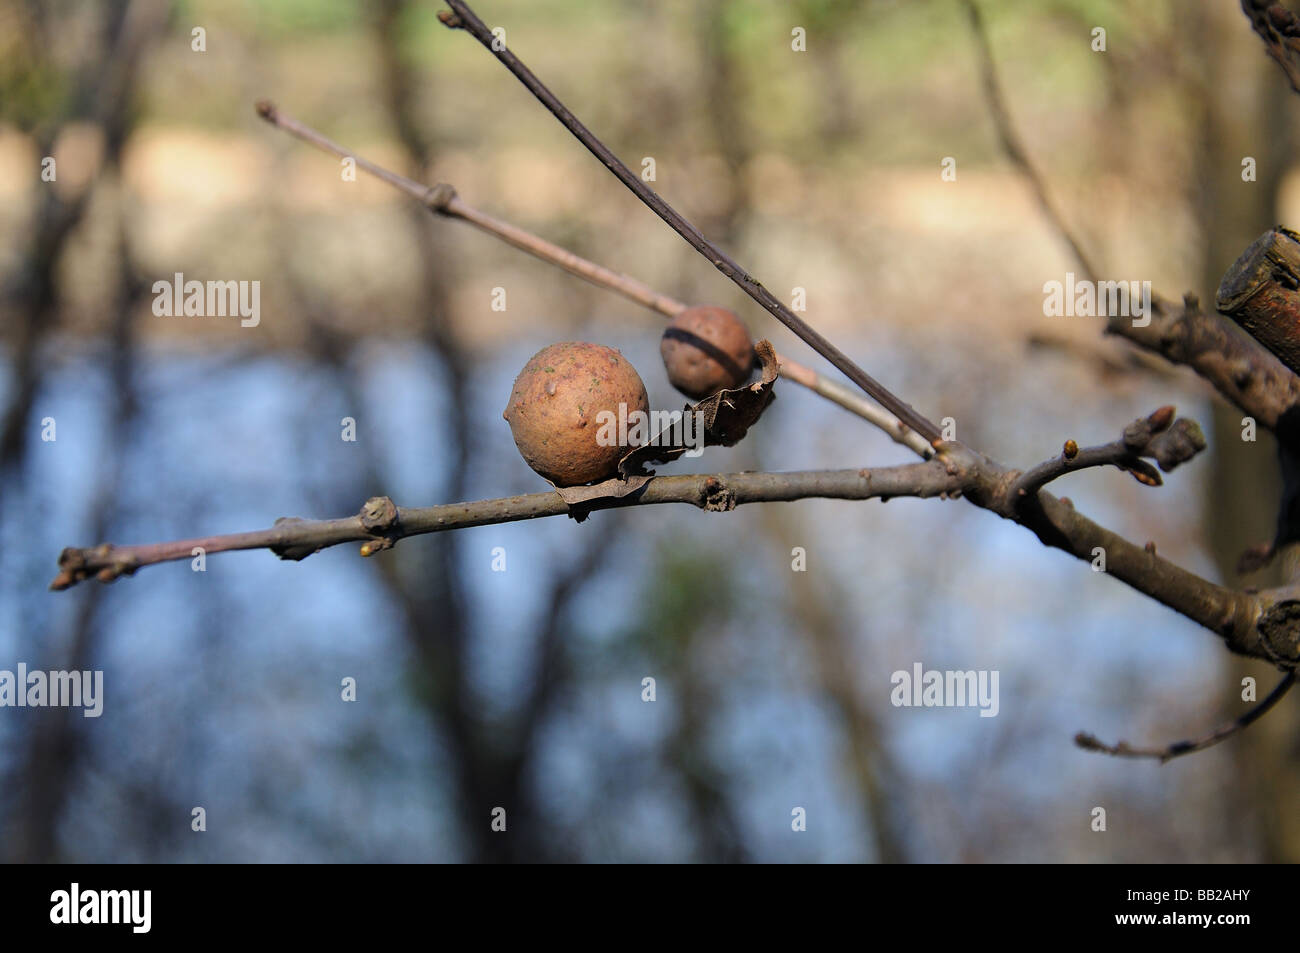 oak apple Stock Photo